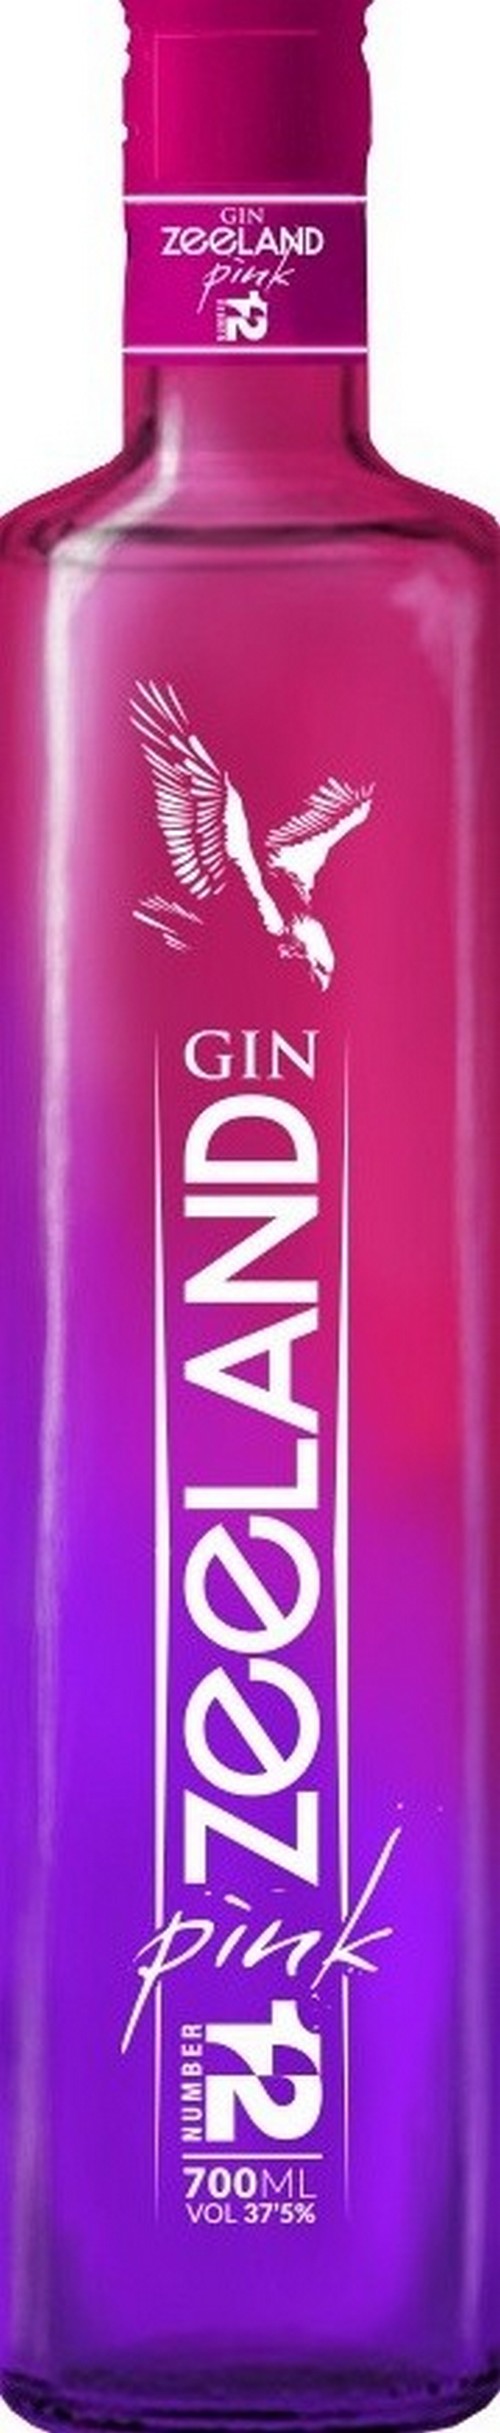 gin-zeeland-pink-